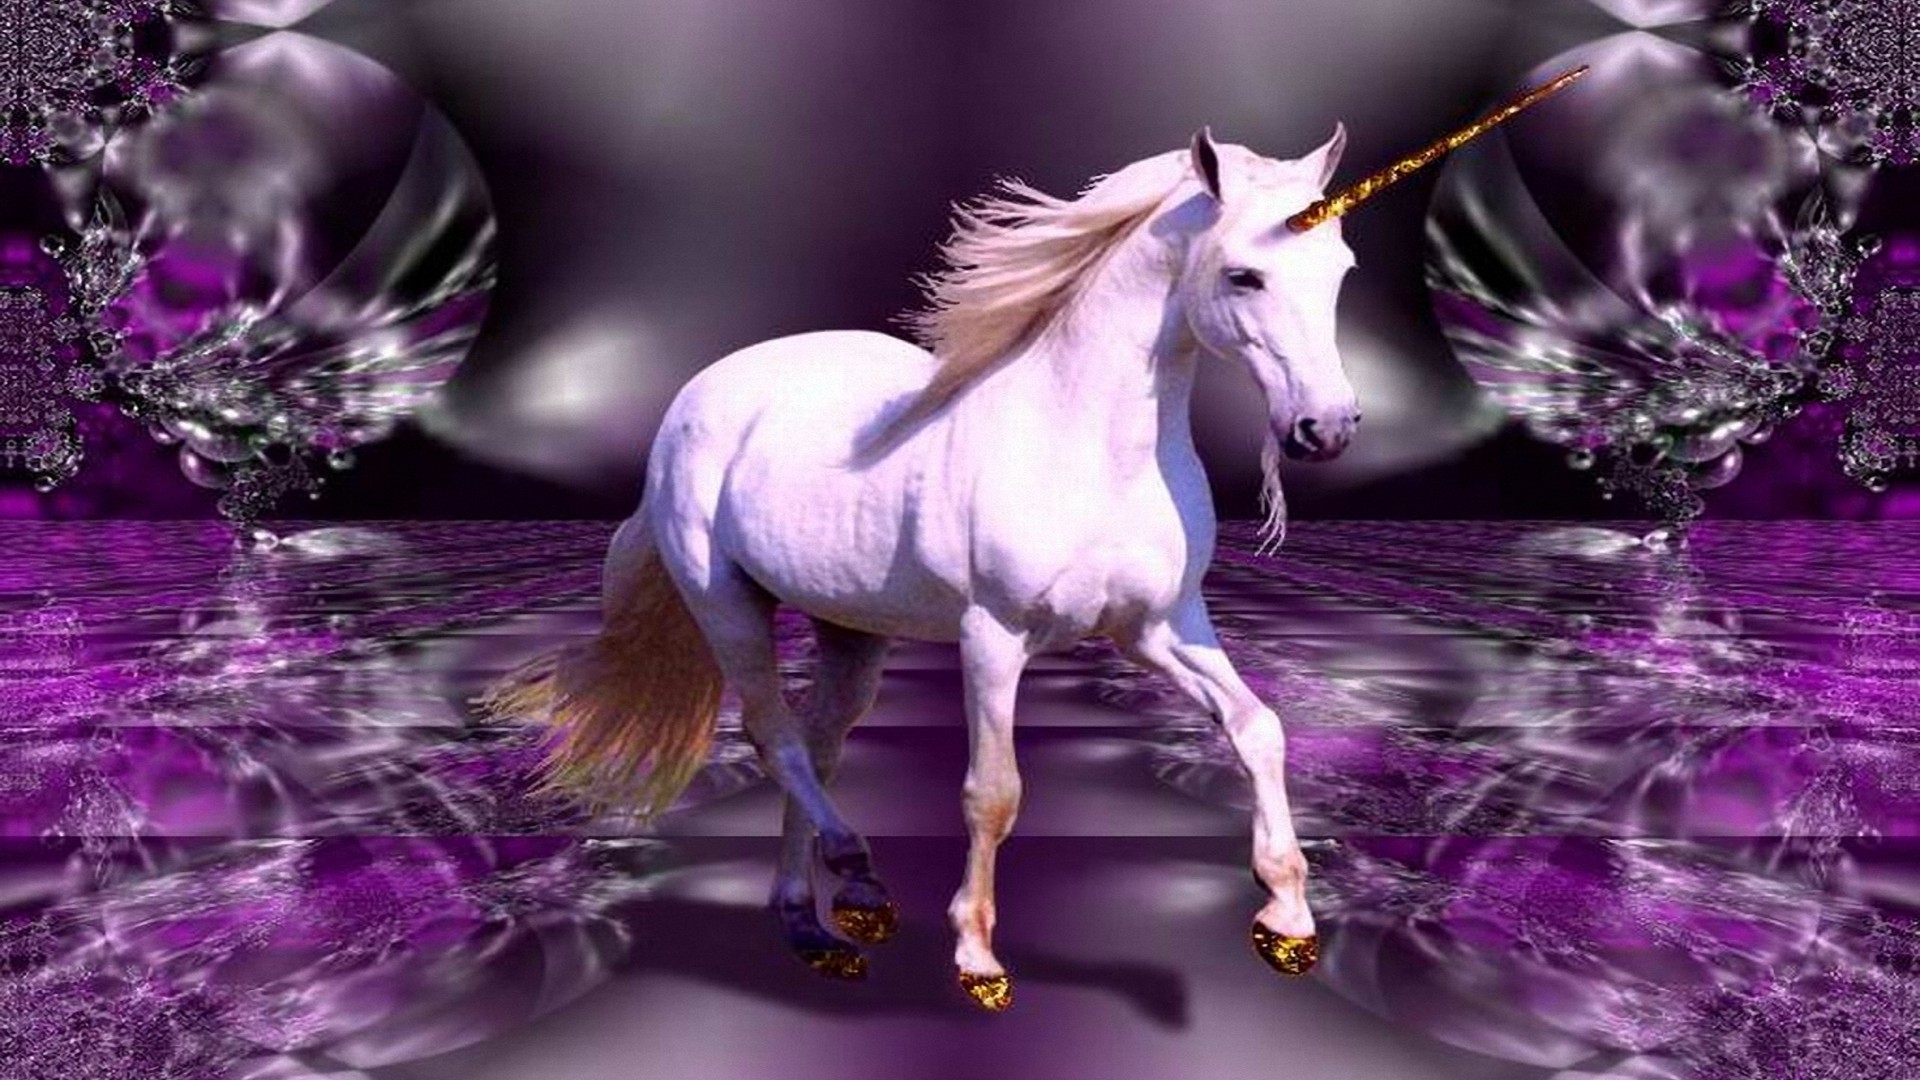 fondos de pantalla de unicornio hd,unicornio,personaje de ficción,criatura mítica,púrpura,lavanda